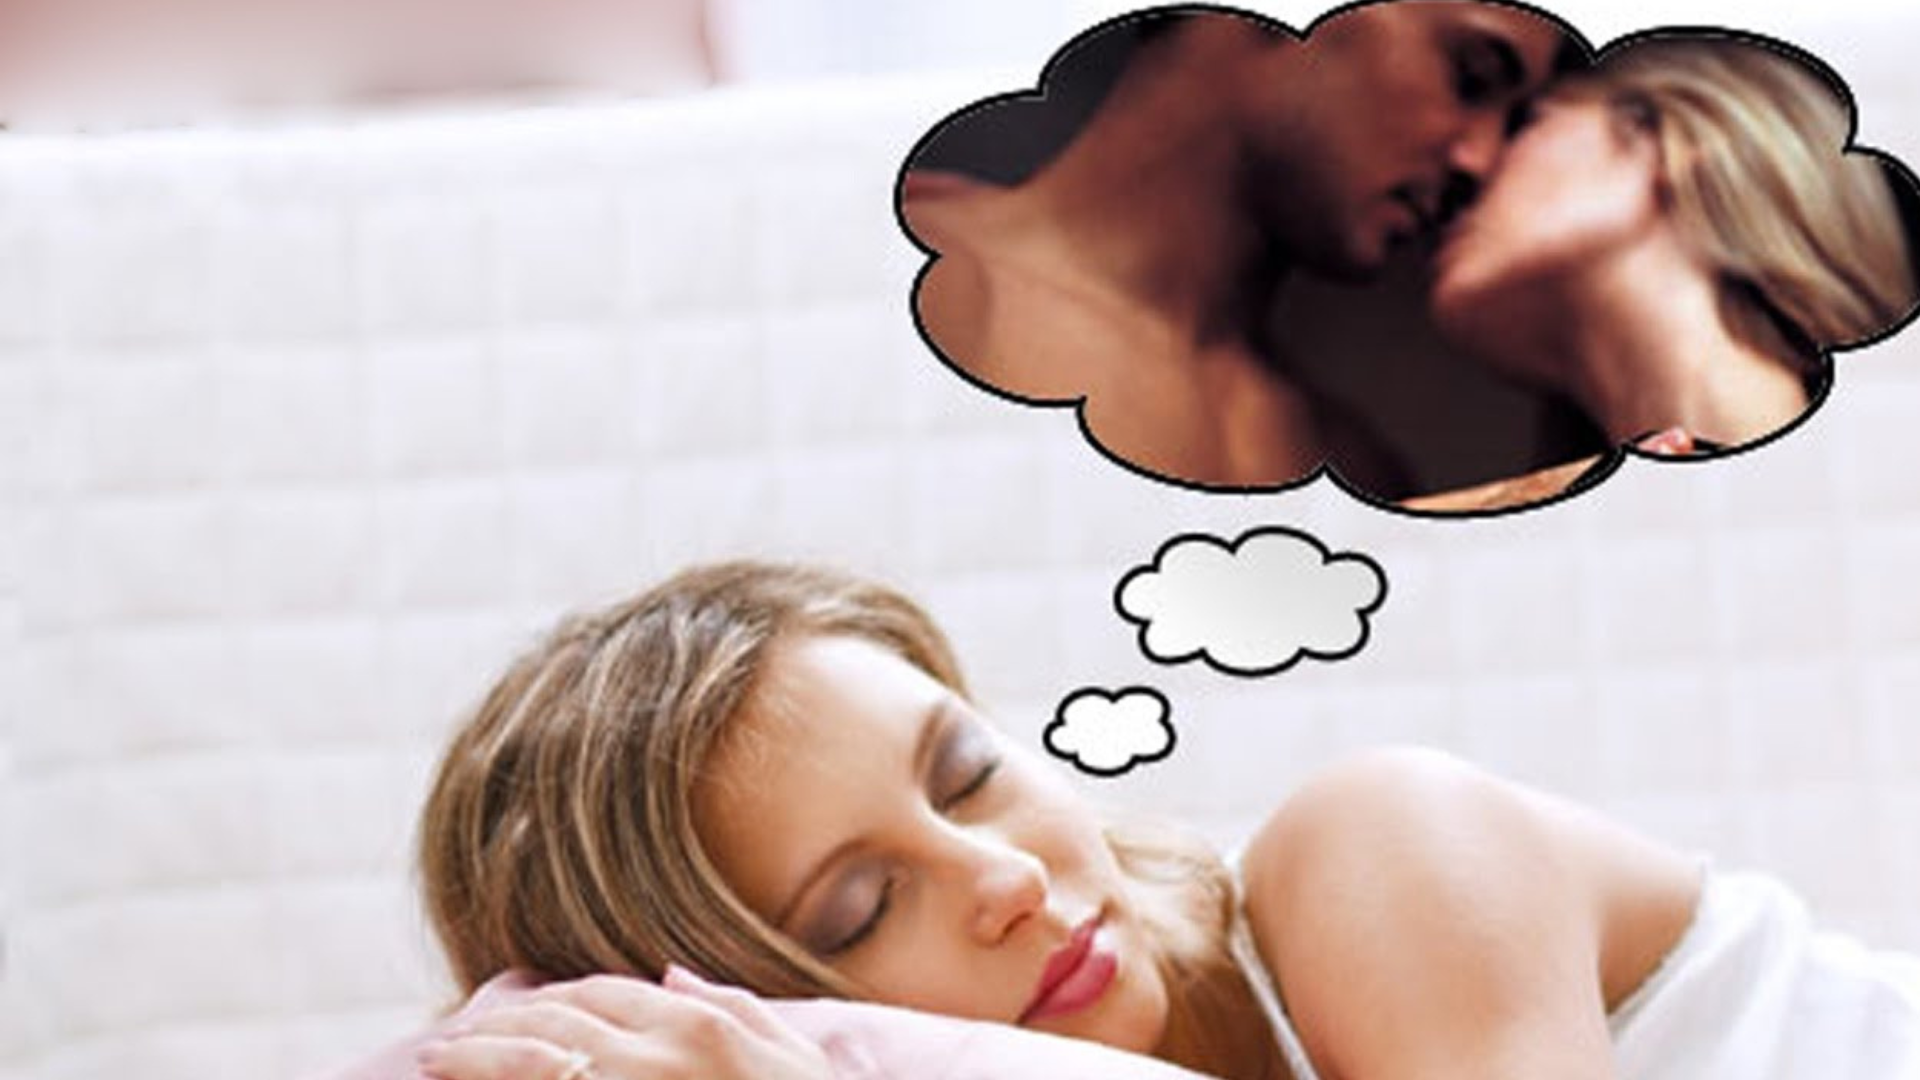 Sleeping woman dreaming of making love